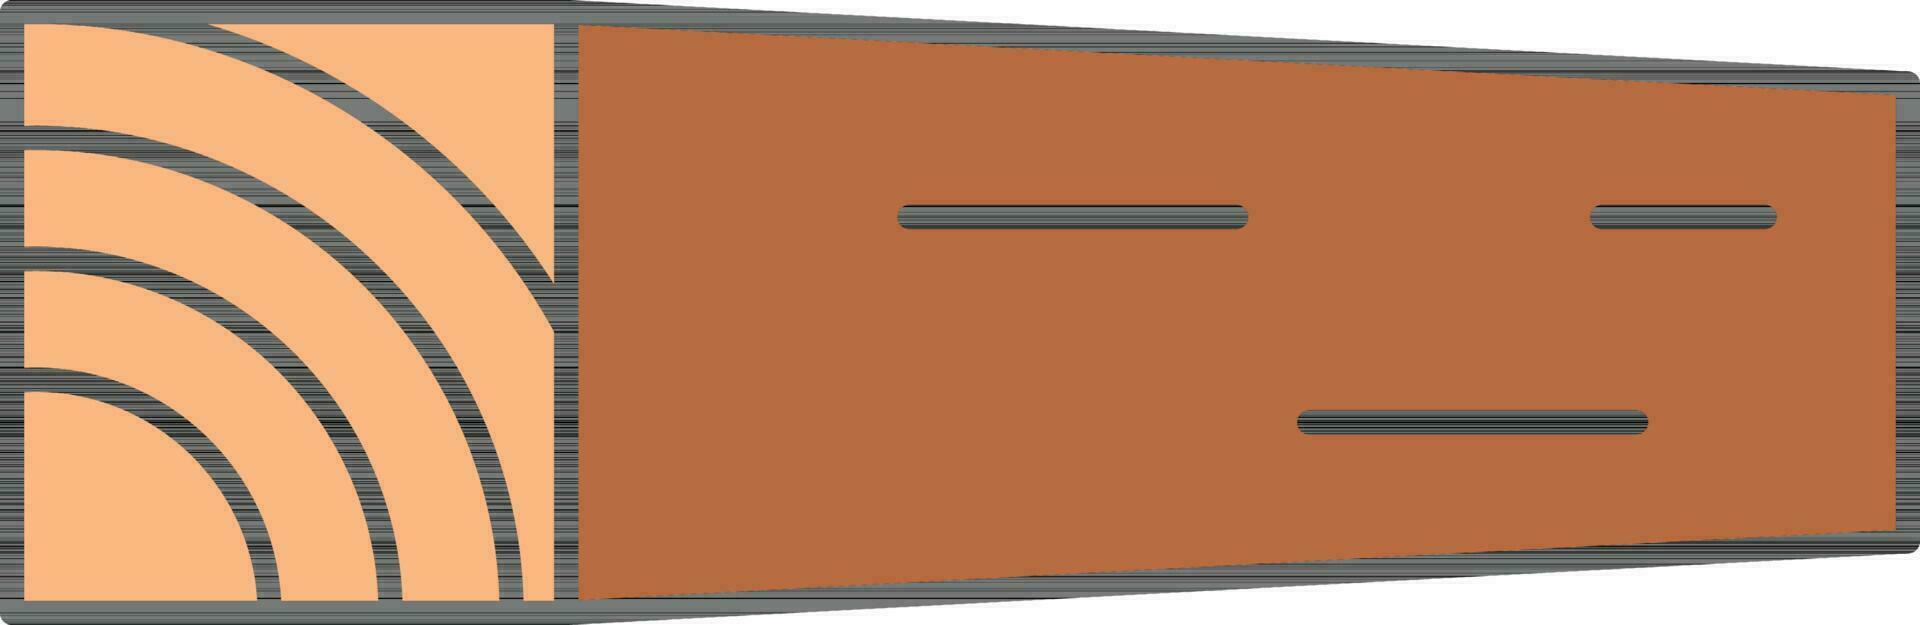 hout plank icoon in oranje en bruin kleur. vector